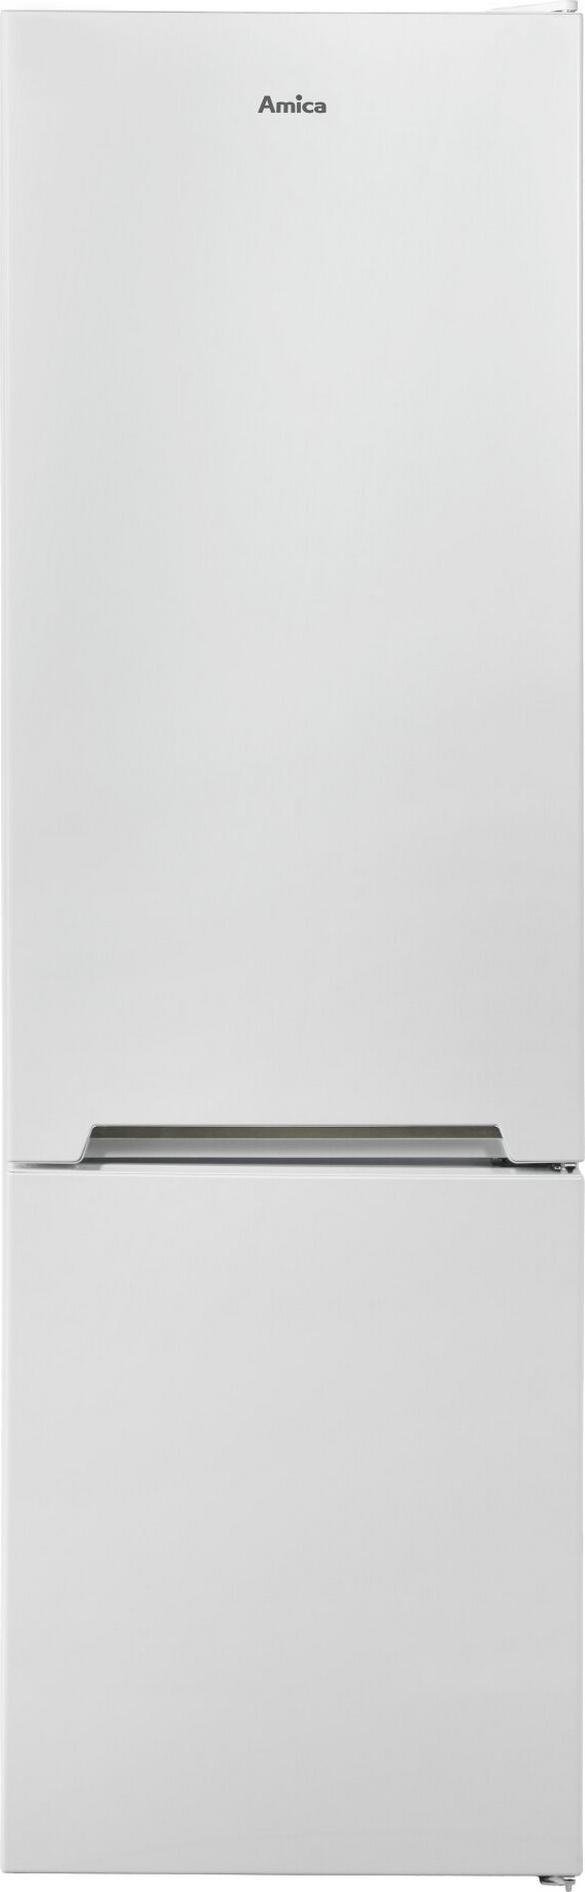 Combine frigorifice - Combina frigorifica  Amica FK3075.2DF,
alb,4 rafturi,
42 dB,
Fara display